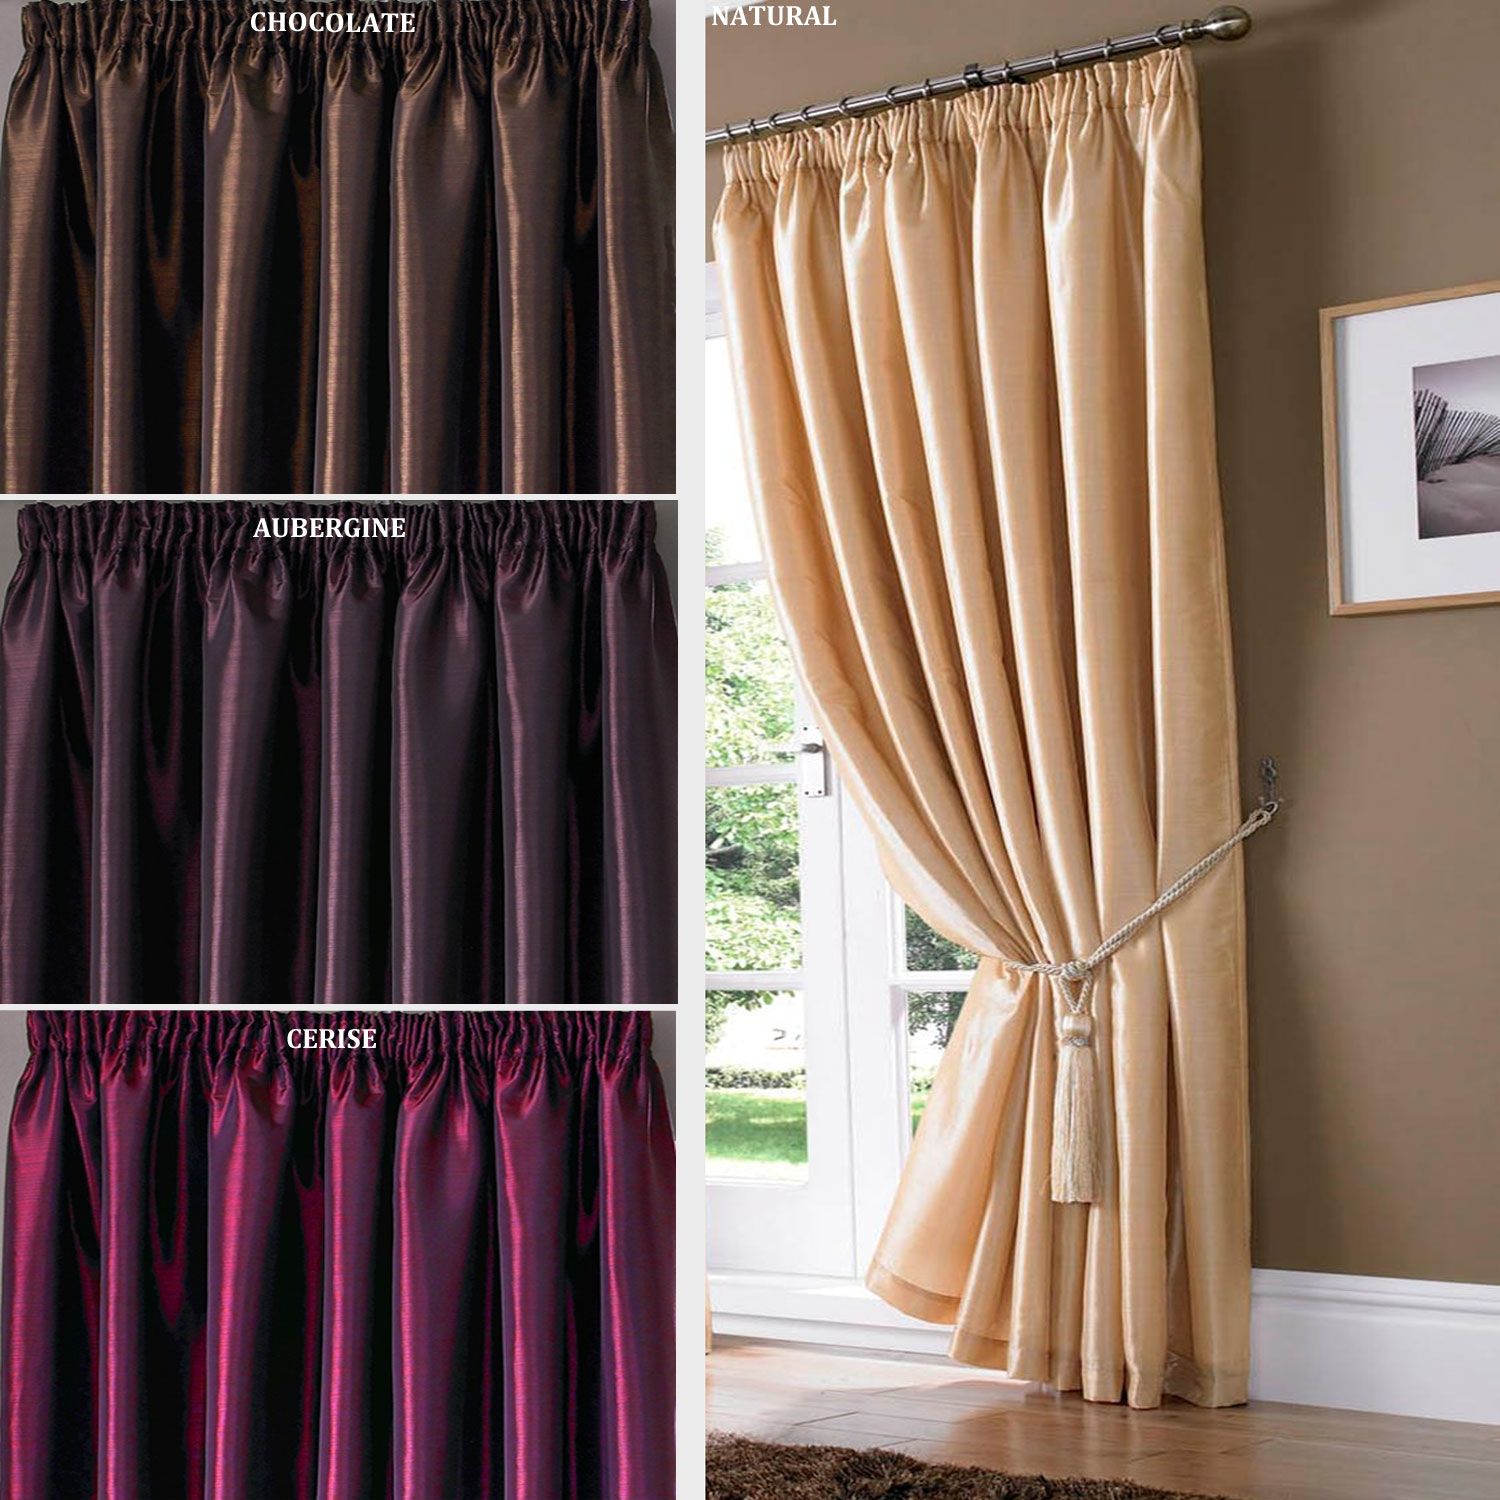 Thermal Door Curtains | Curtain Ideas